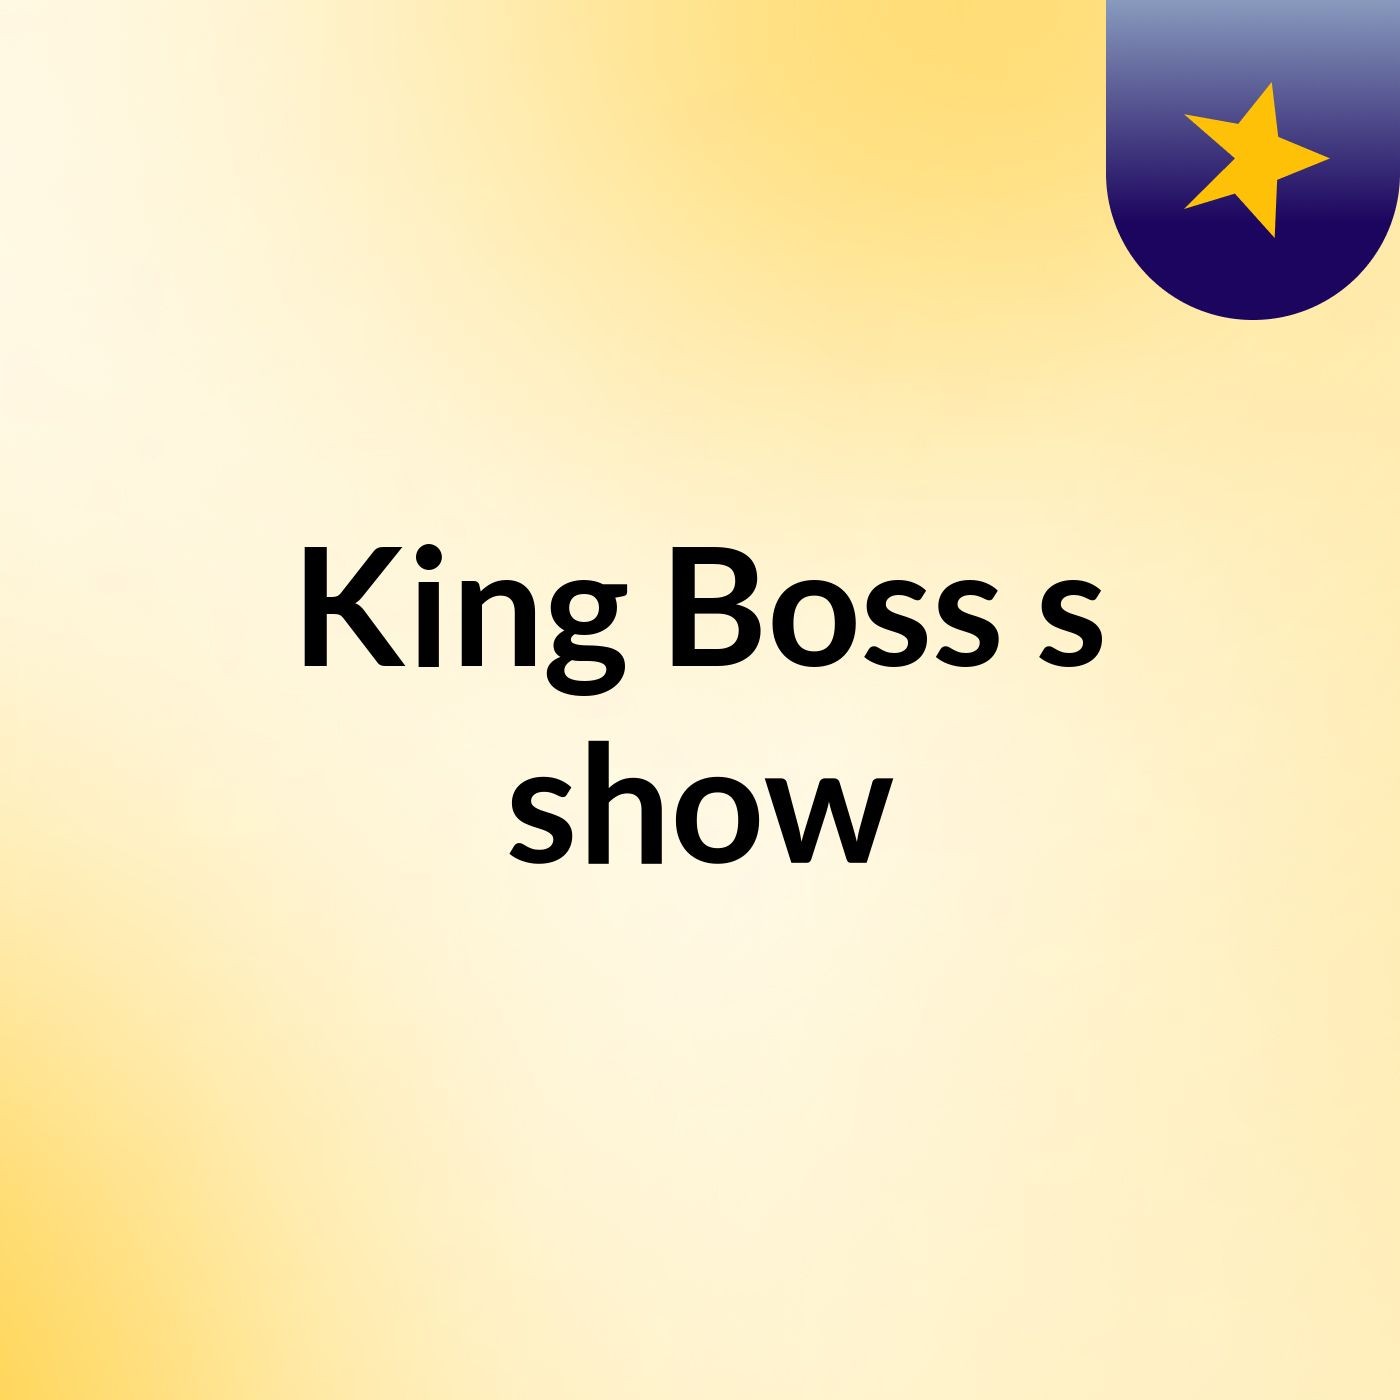 King Boss's show